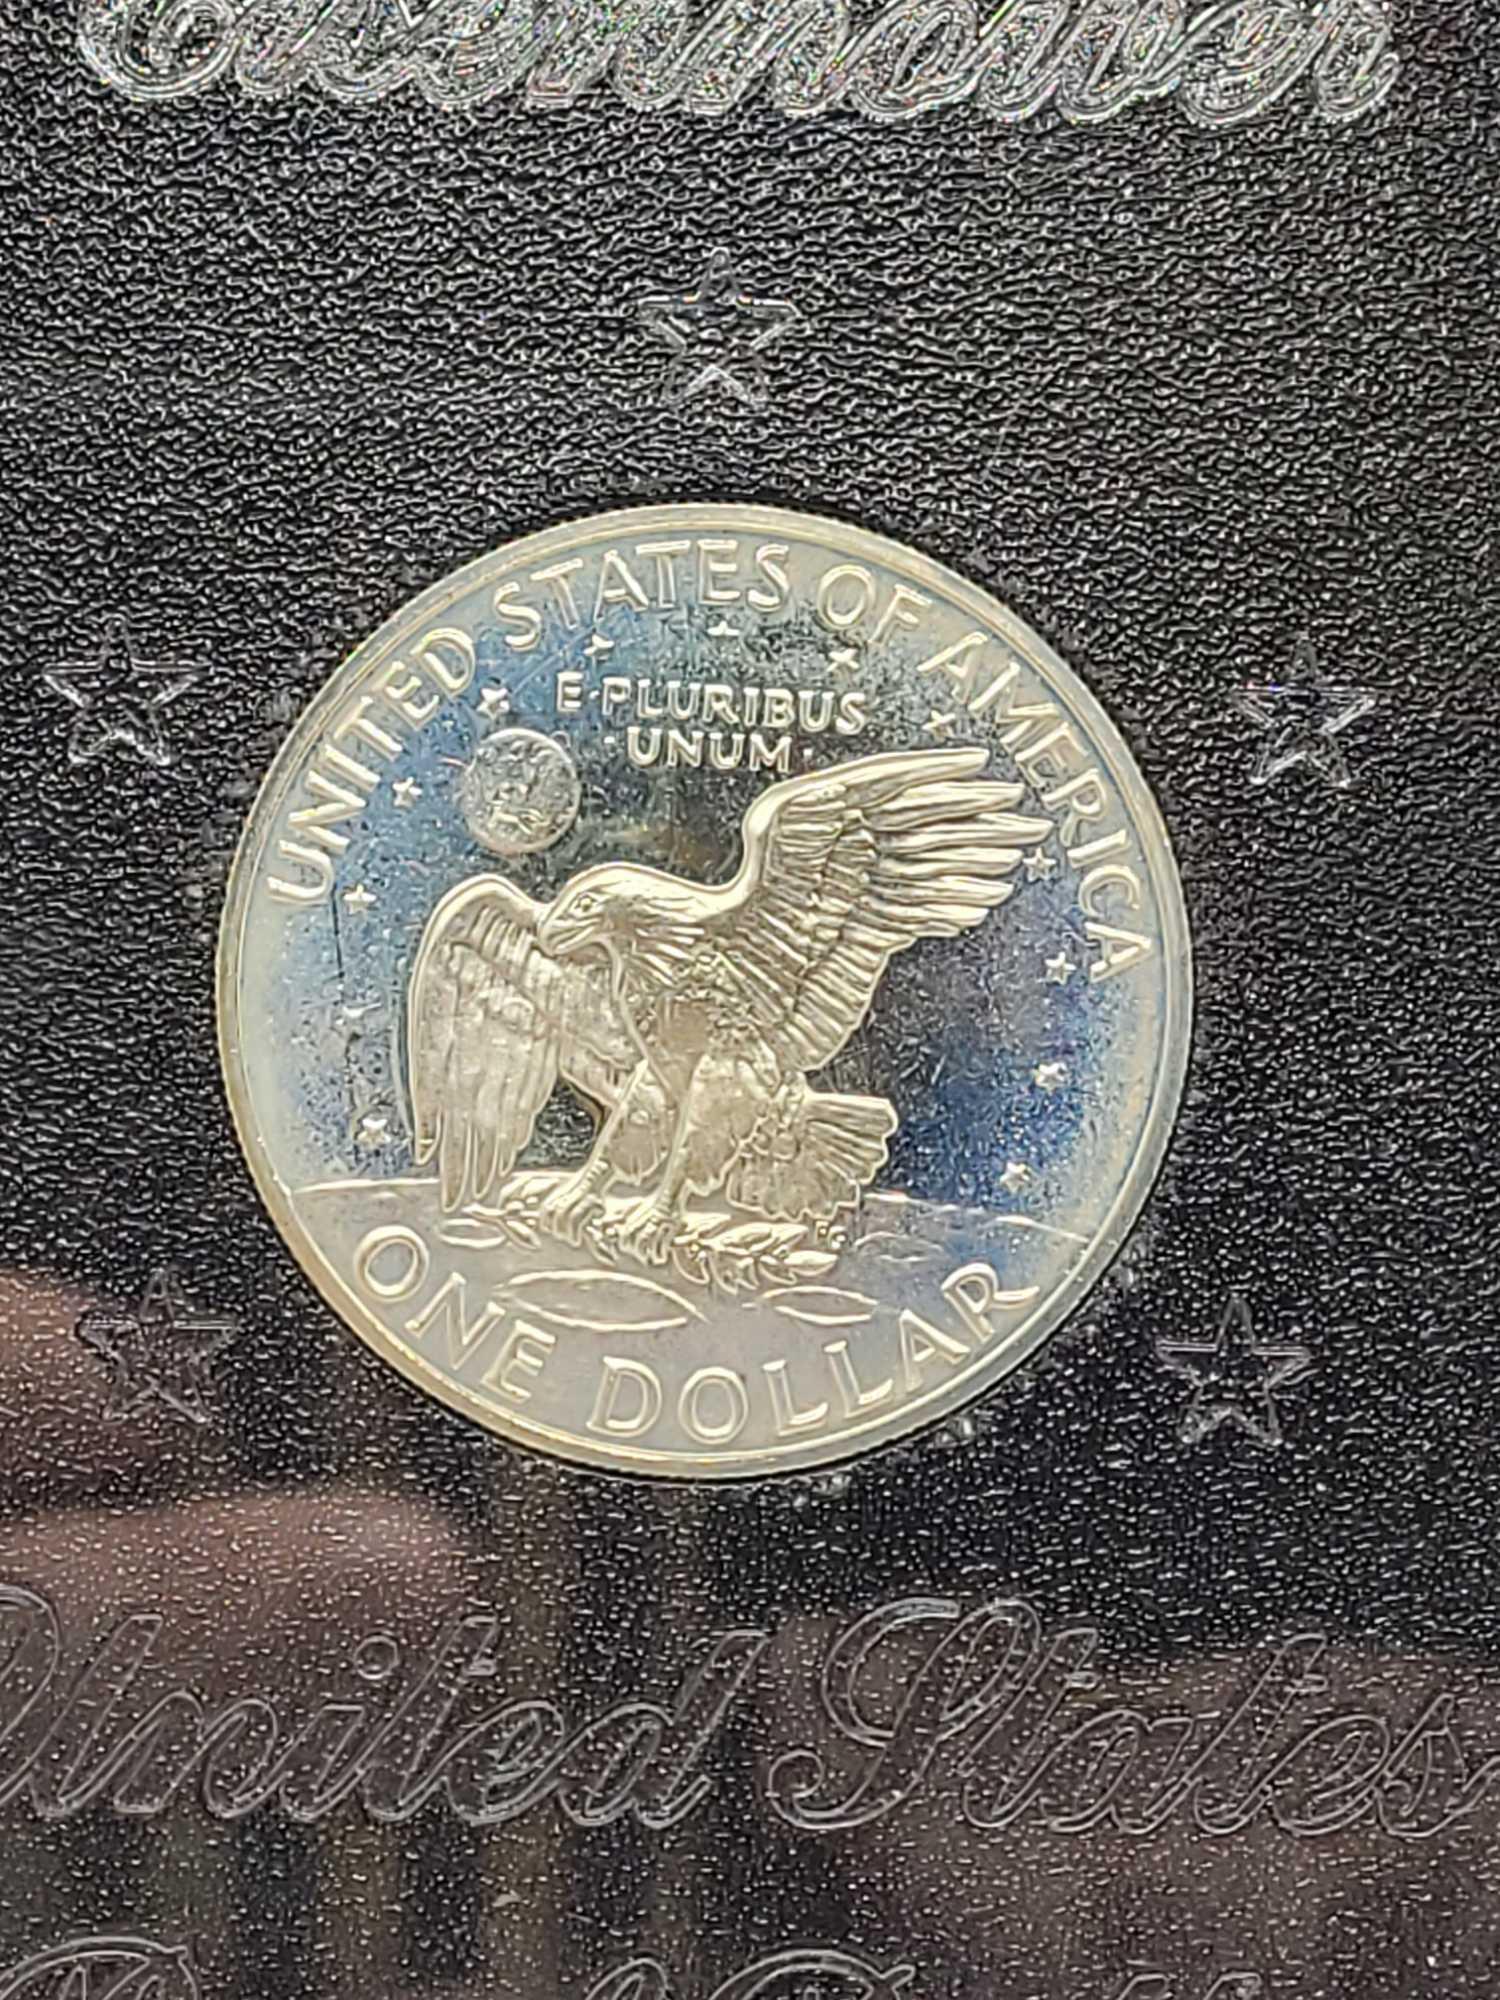 Investor lot of 7 Silver Proof Eisenhower Dollars in Original US Mint Cases